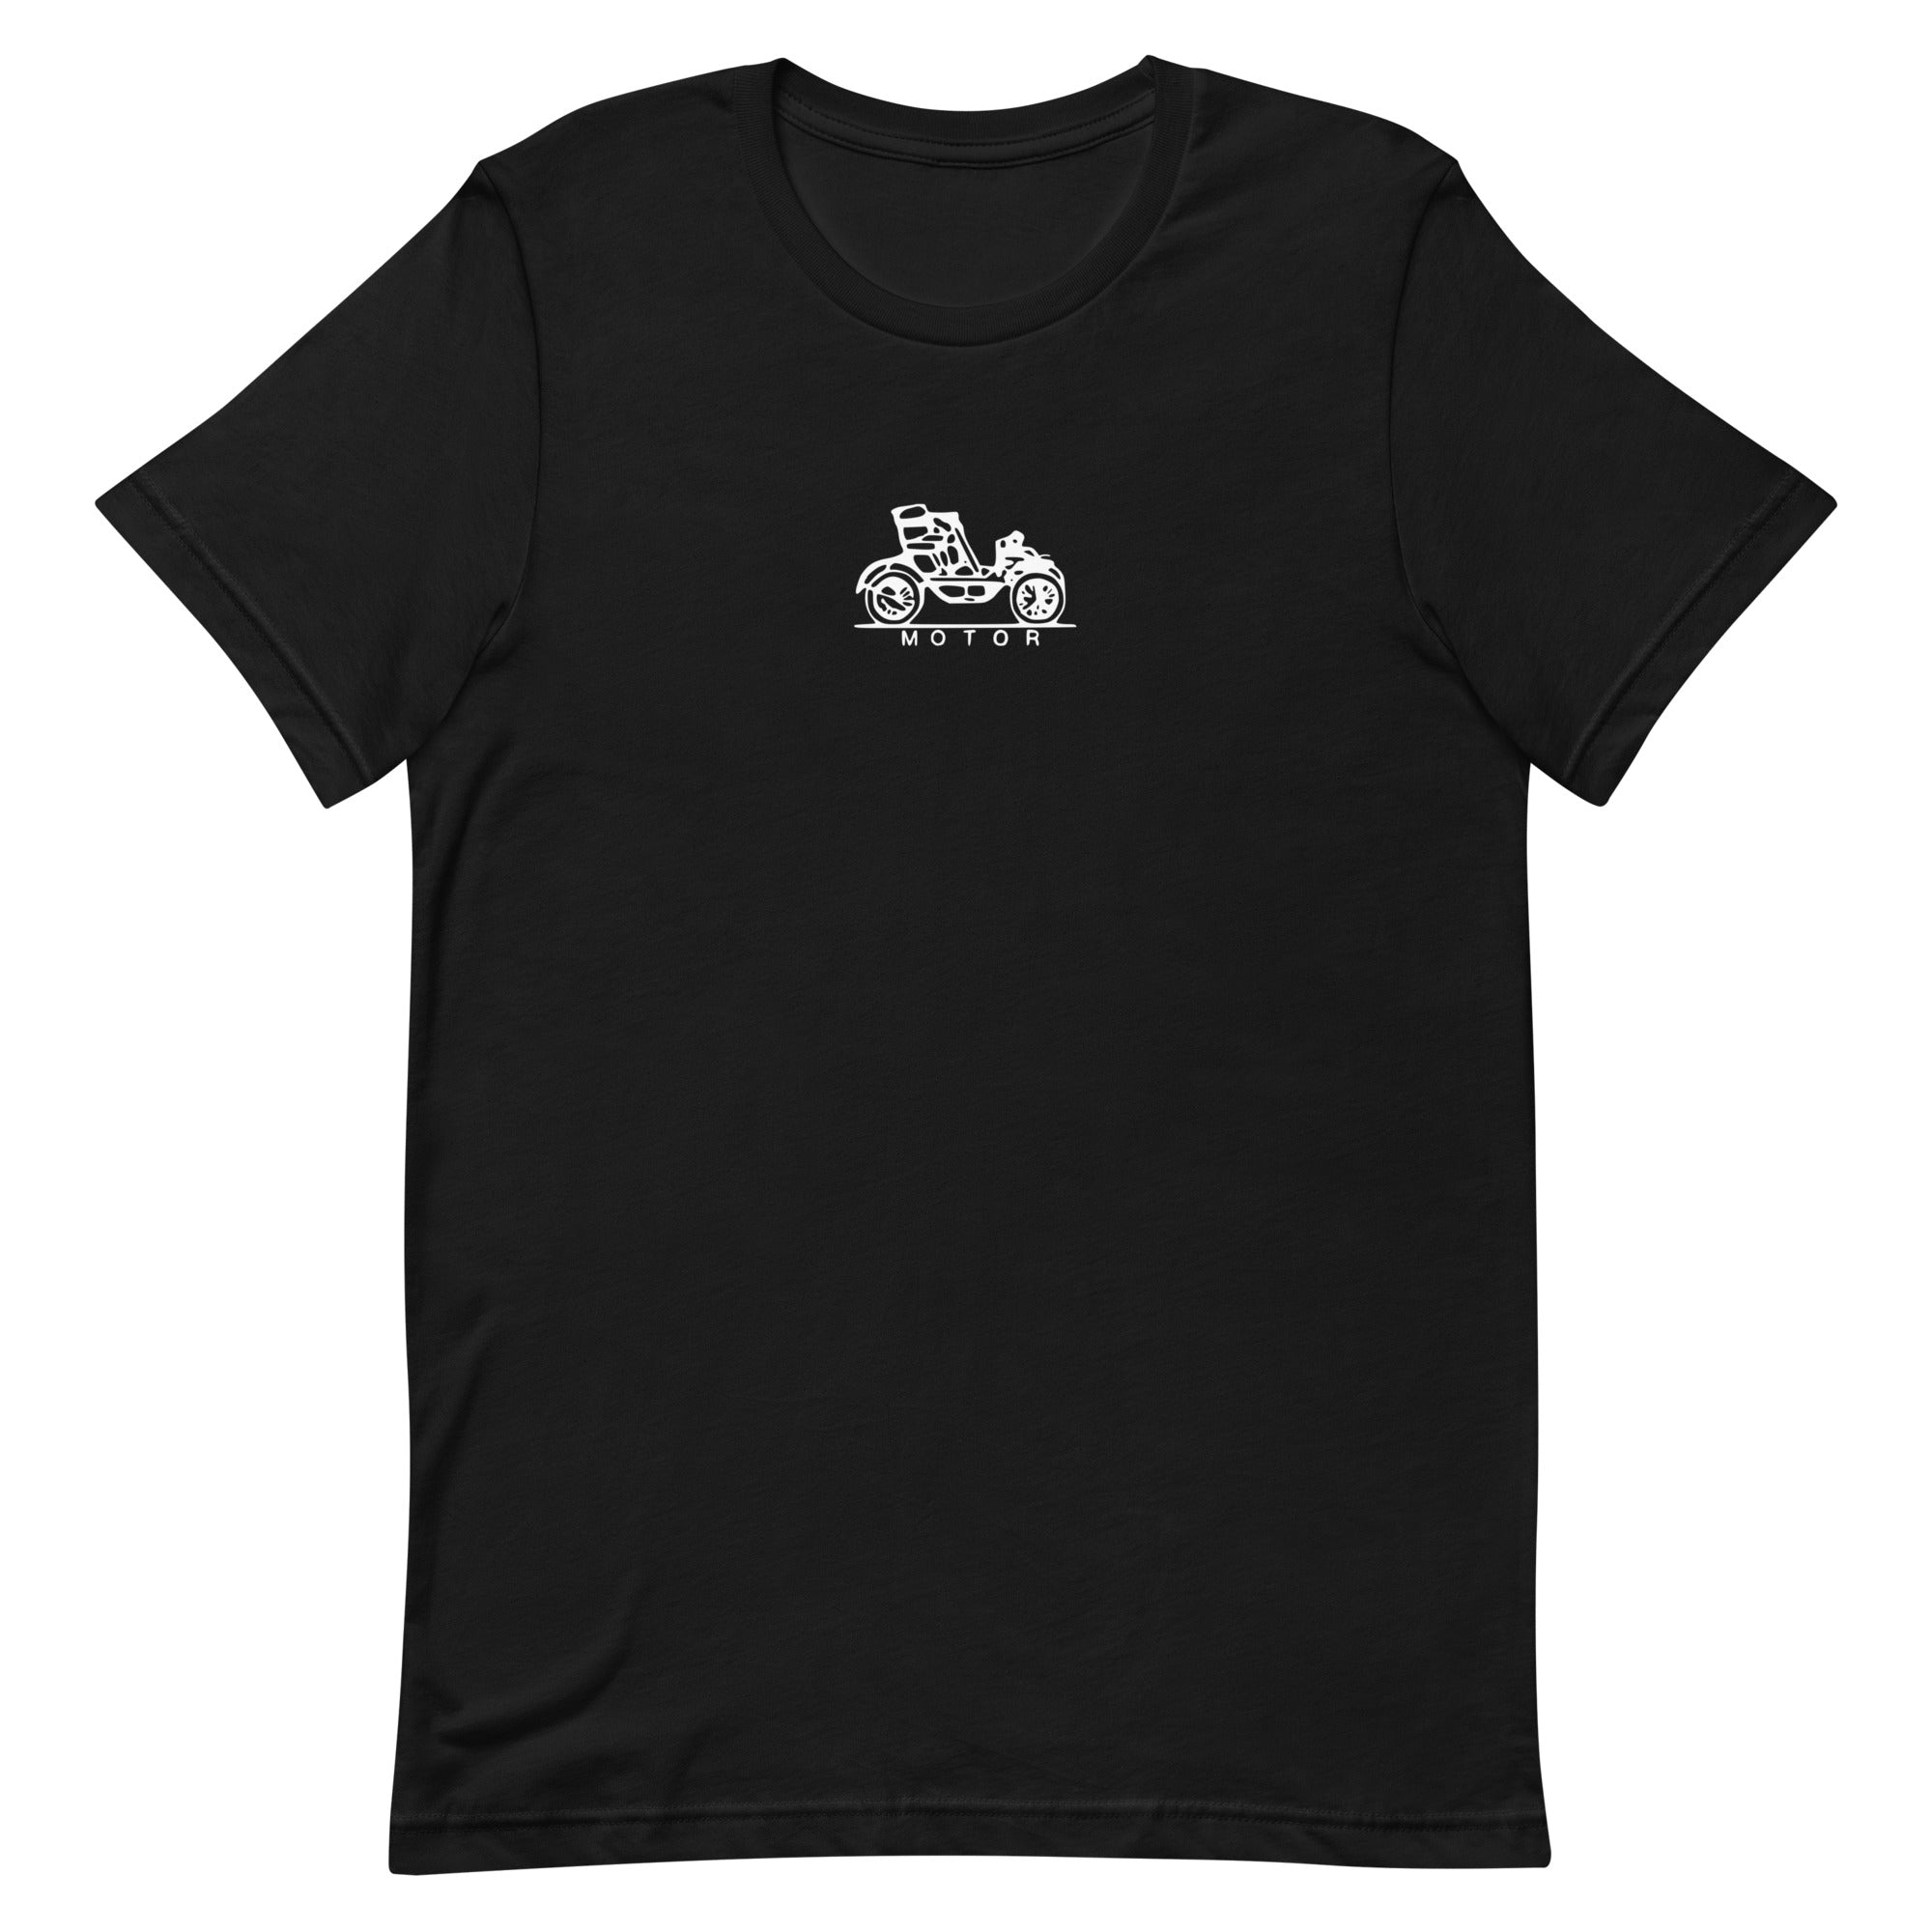 Unisex t-shirt - Motor